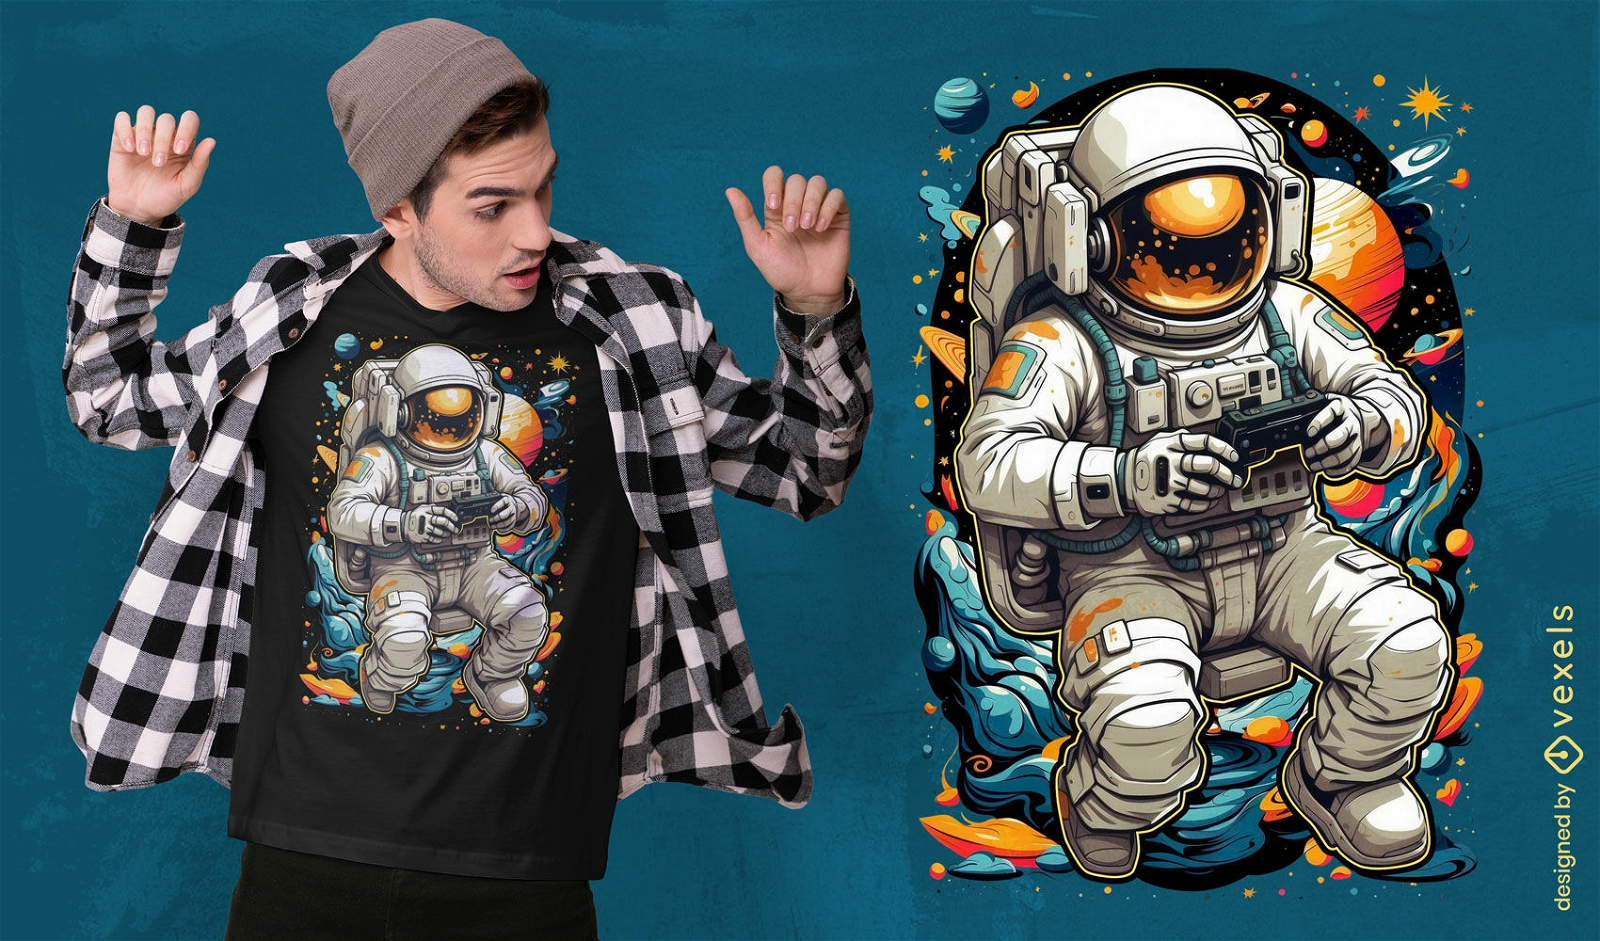 Dise?o de camiseta de jugador astronauta en tonos c?smicos.